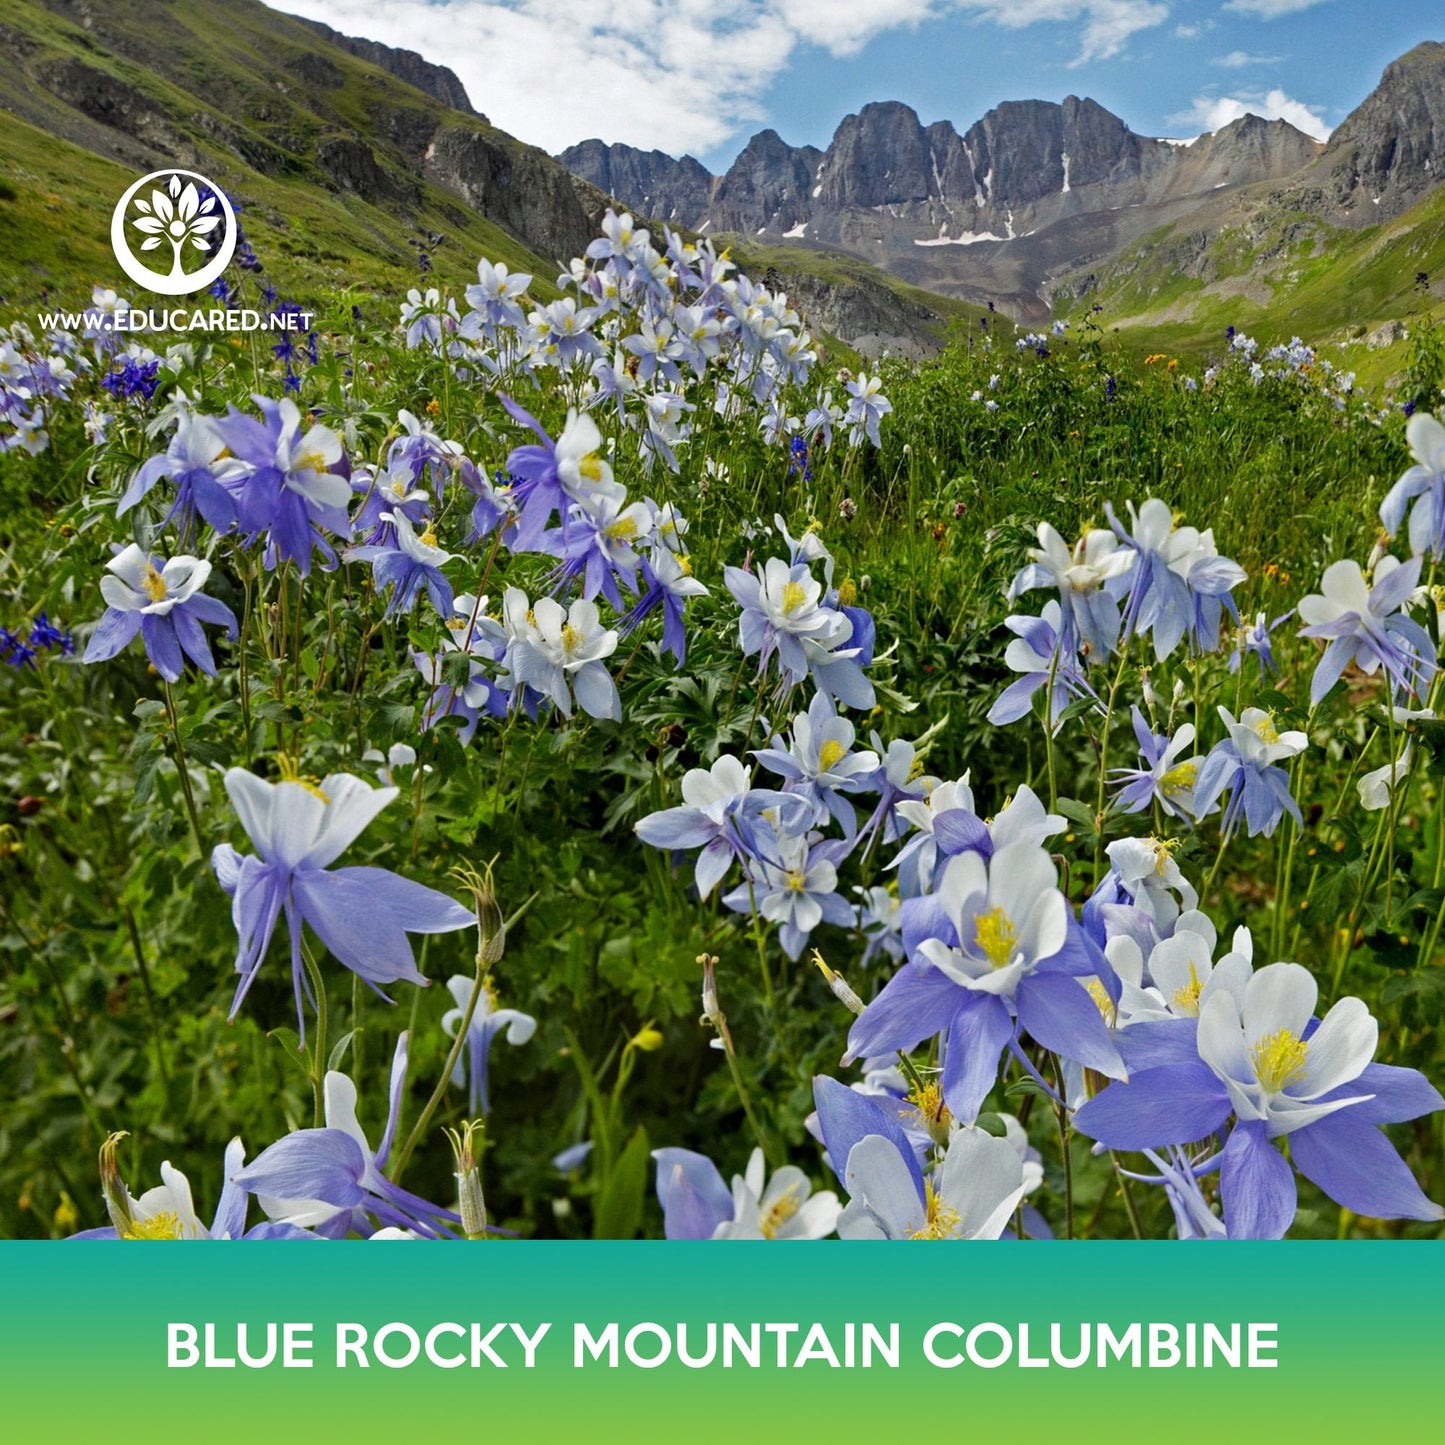 Blue Rocky Mountain Columbine Flower Seeds, Aquilegia caerulea